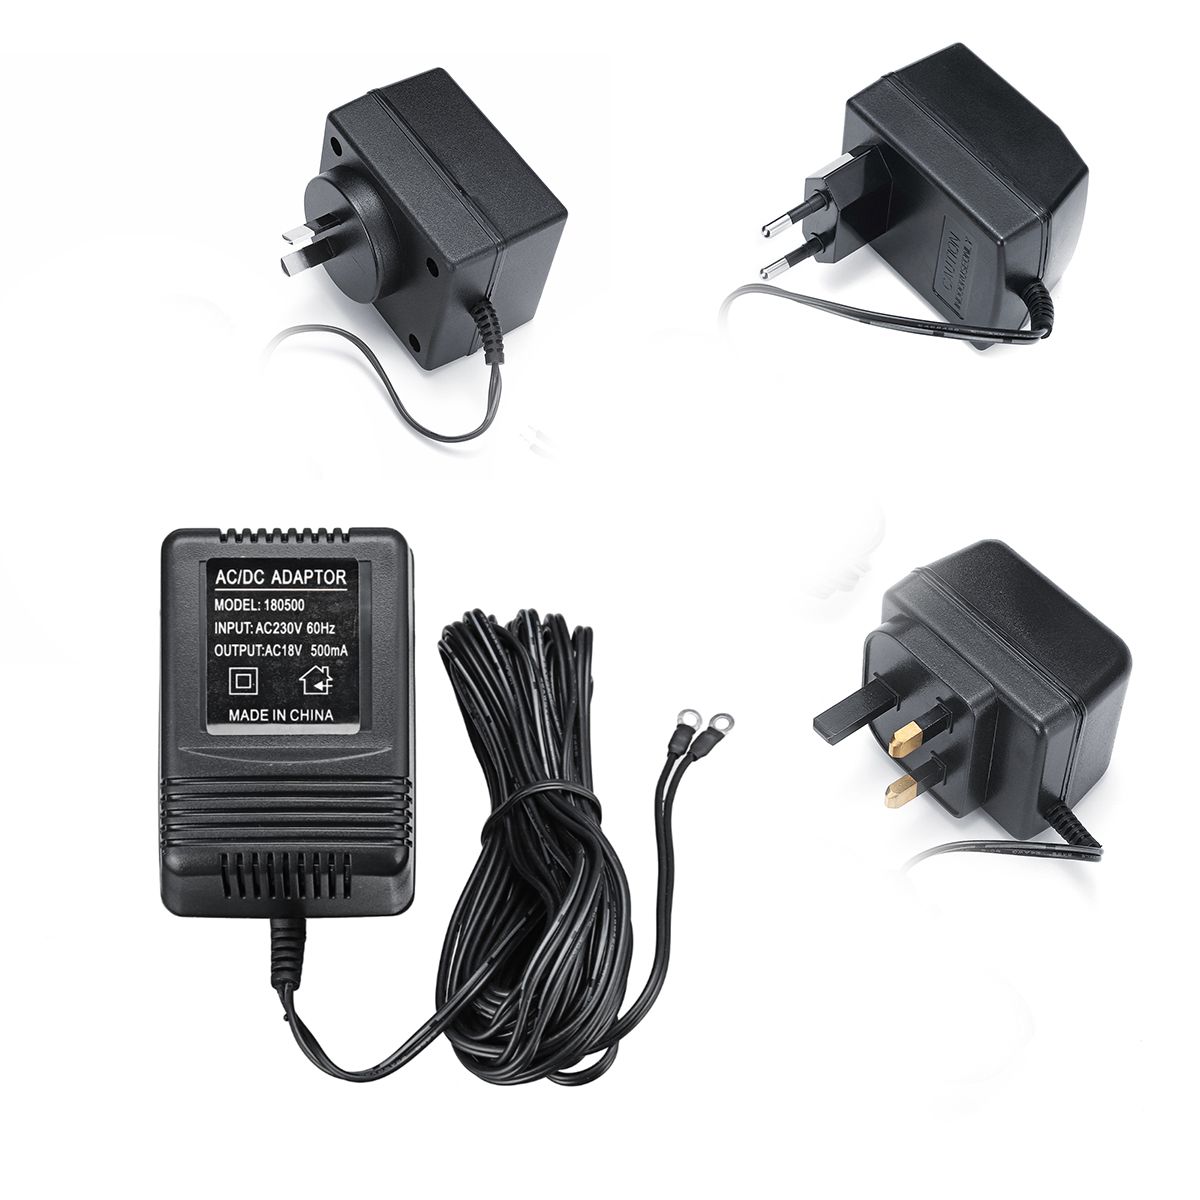 3M-230V-To-18V--Video-Doorbell-Power-Supply-Adapter-Transformer-EU-PlugAU-PlugUK-Plug-1433604